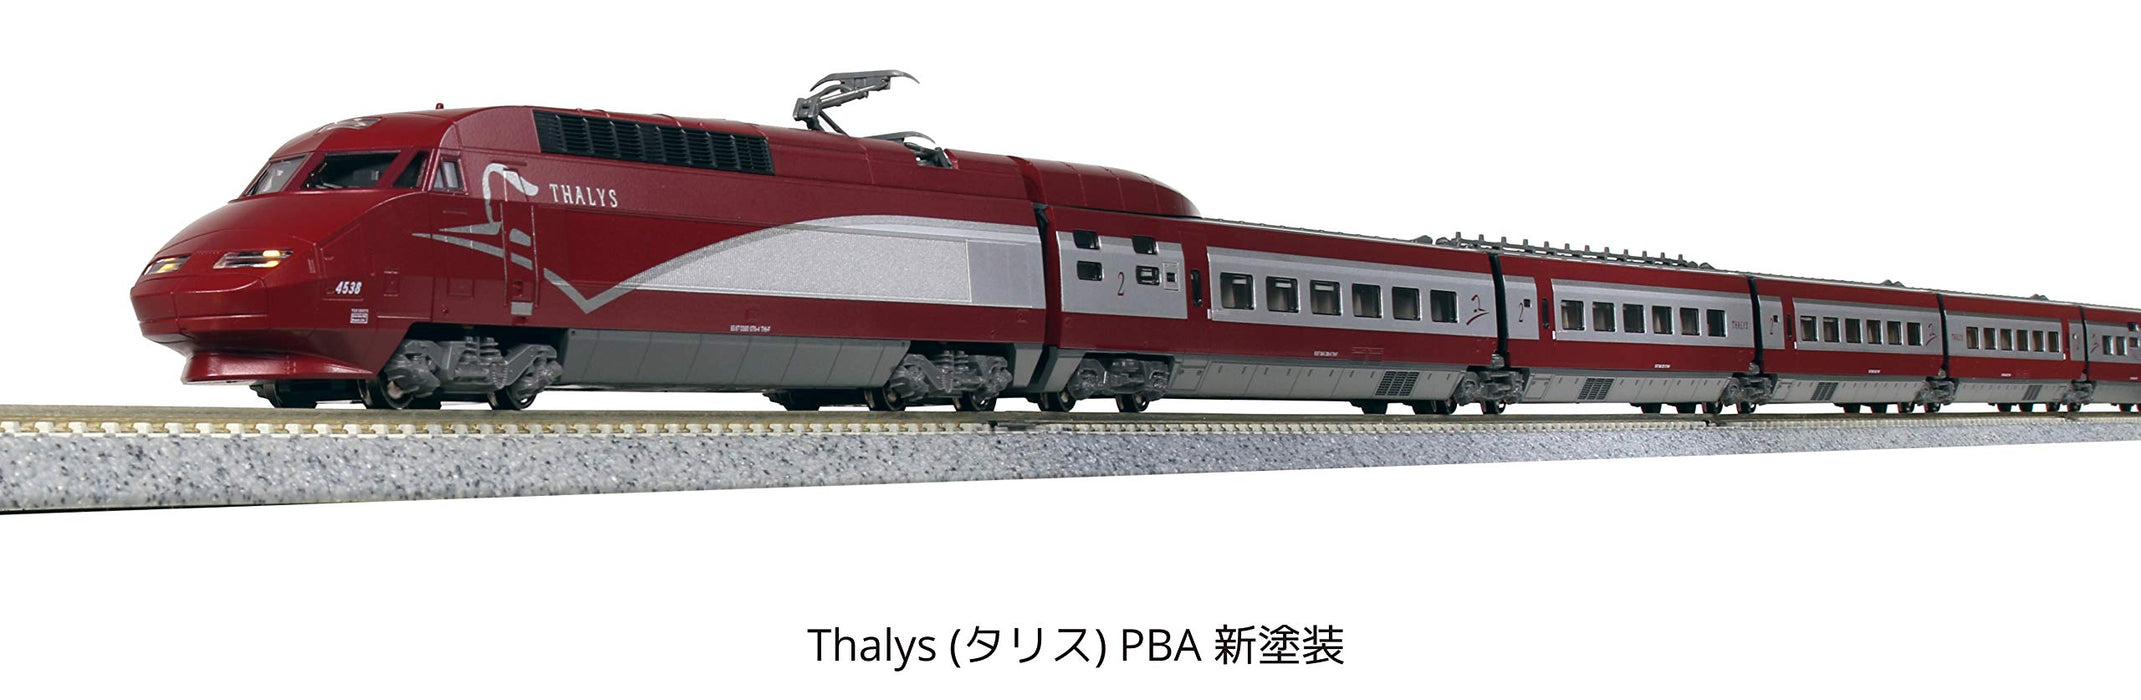 Kato N Gauge 10-Car Set Thalys Pba New Paint 10-1657 Railway Model Train